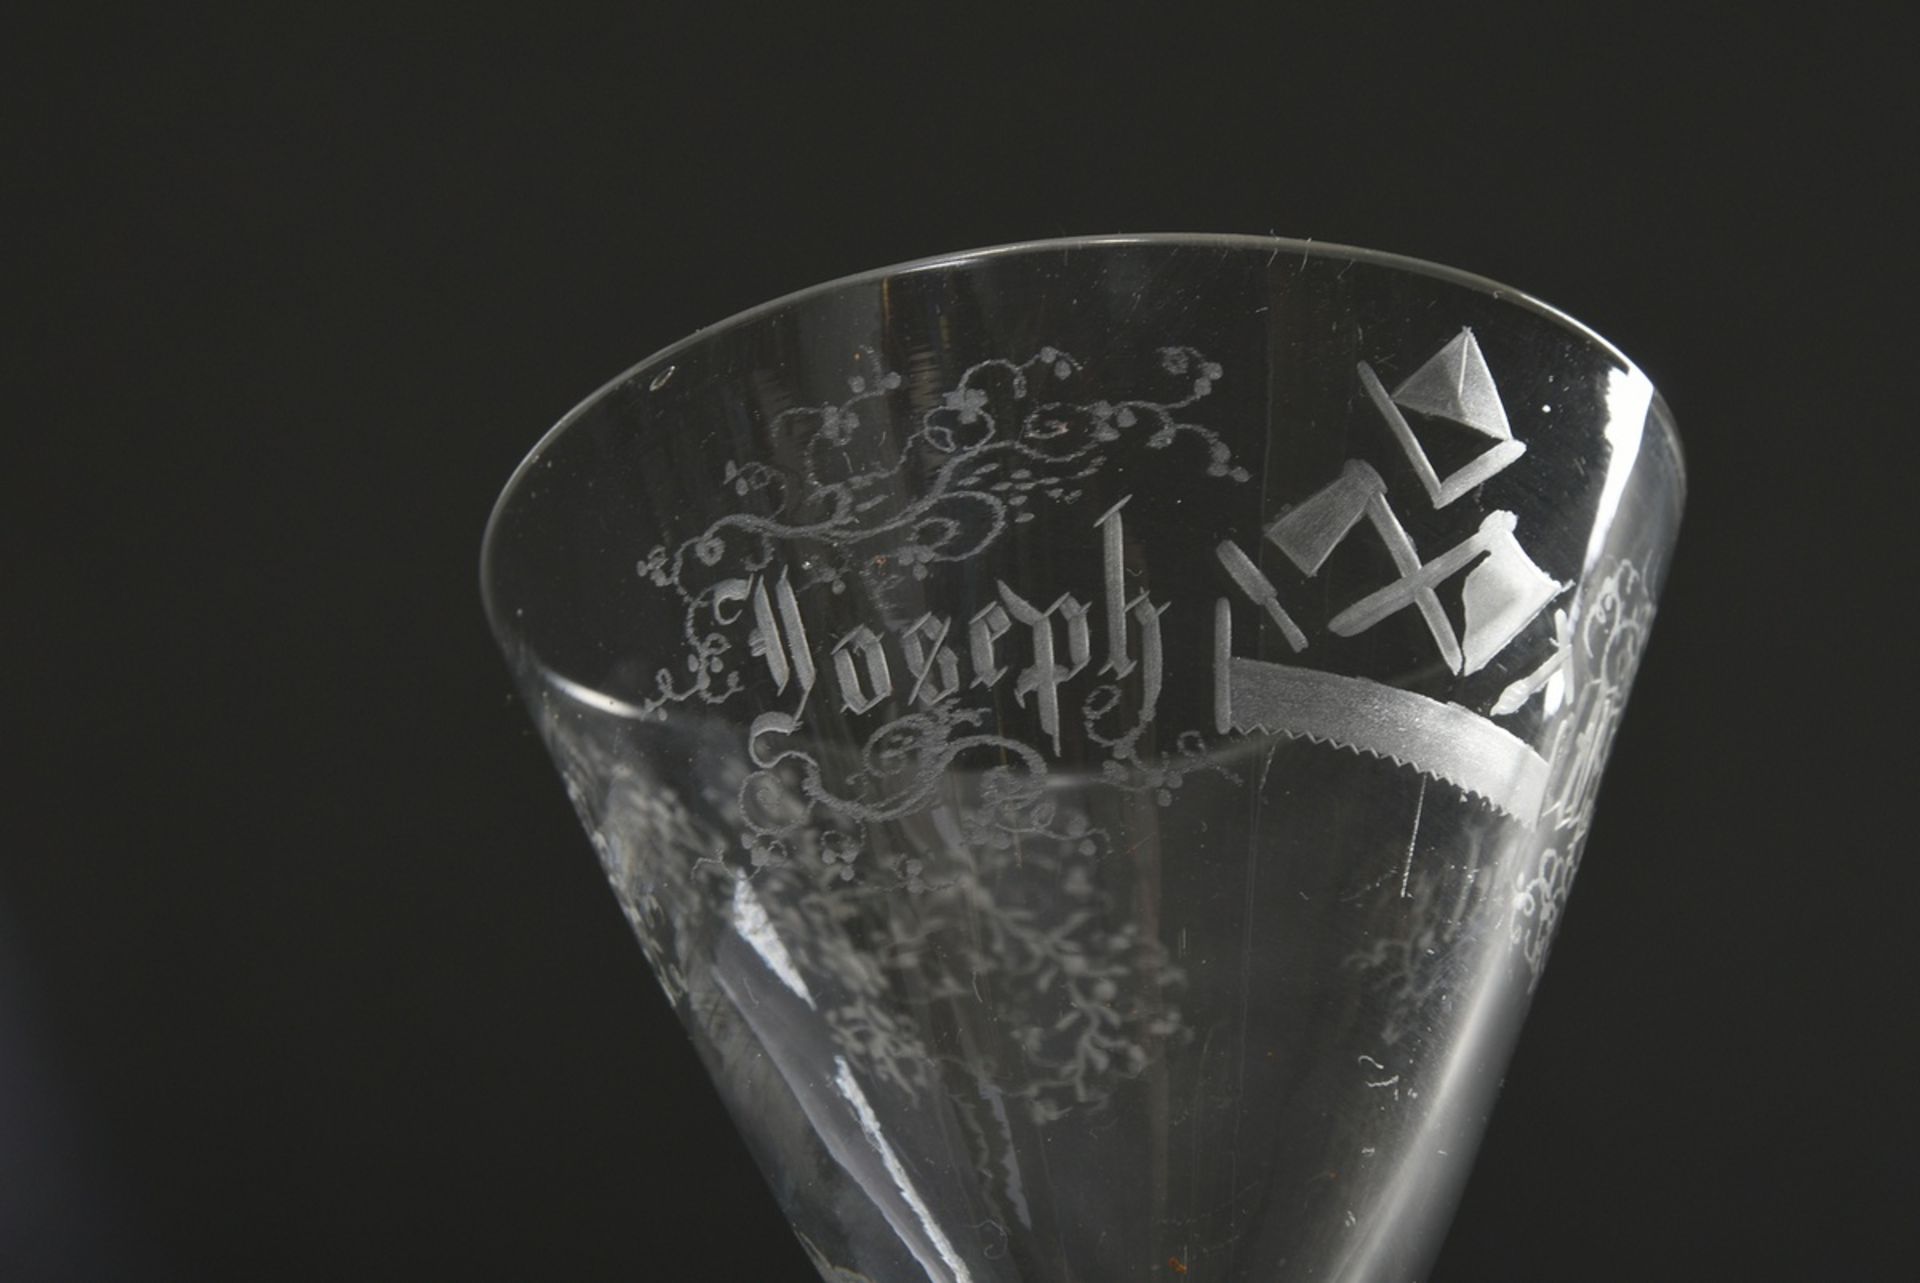 Masonic goblet with floral decoration, carpenter symbolism and inscription "Josef Weigel", nodus in - Image 3 of 5